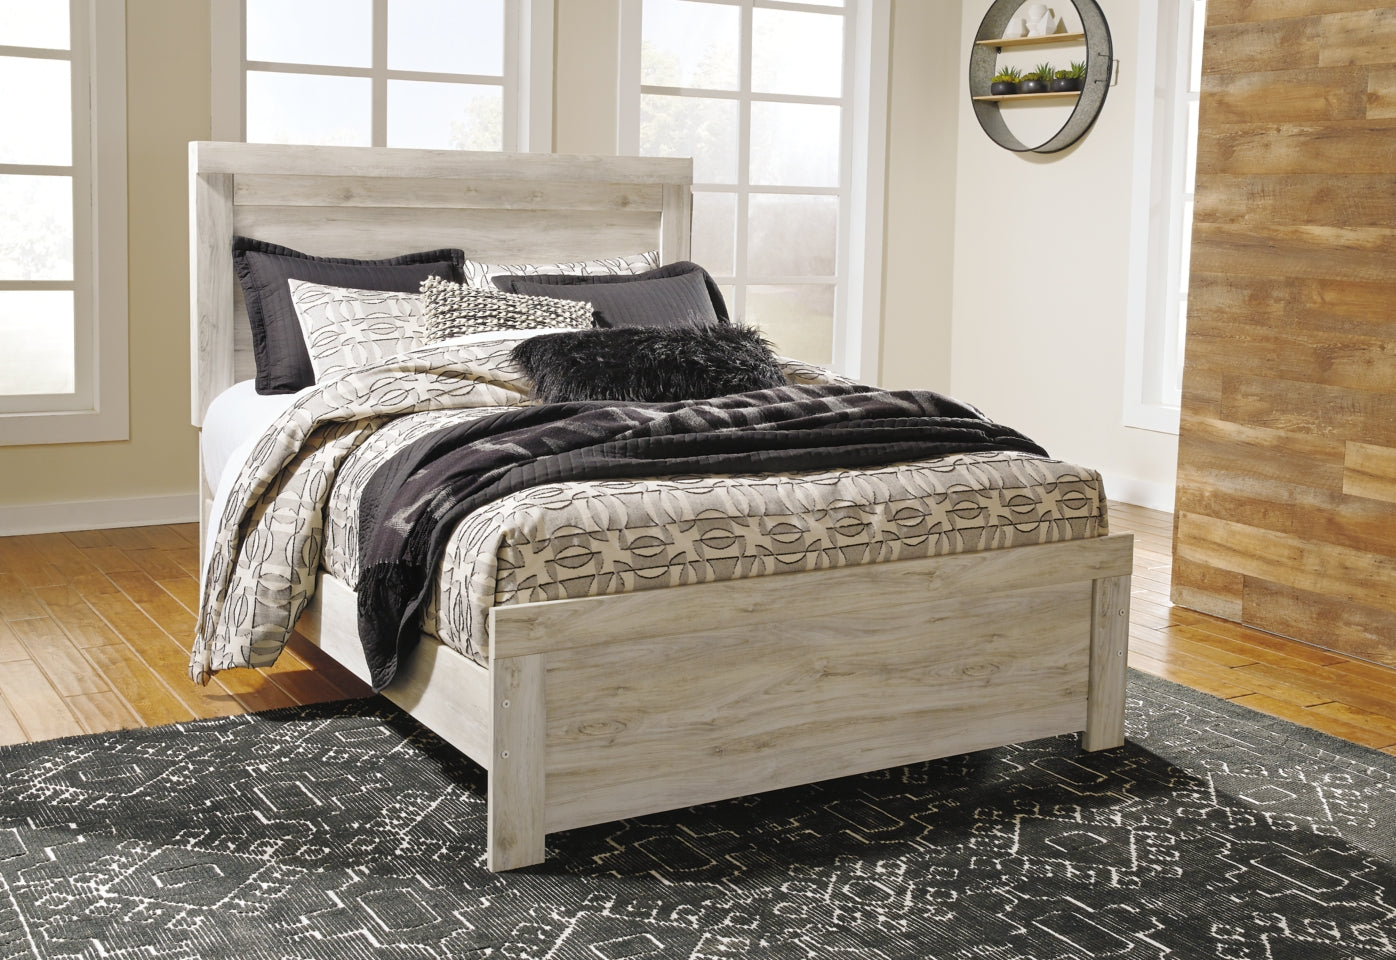 Bellaby Queen Panel Bed with 2 Nightstands